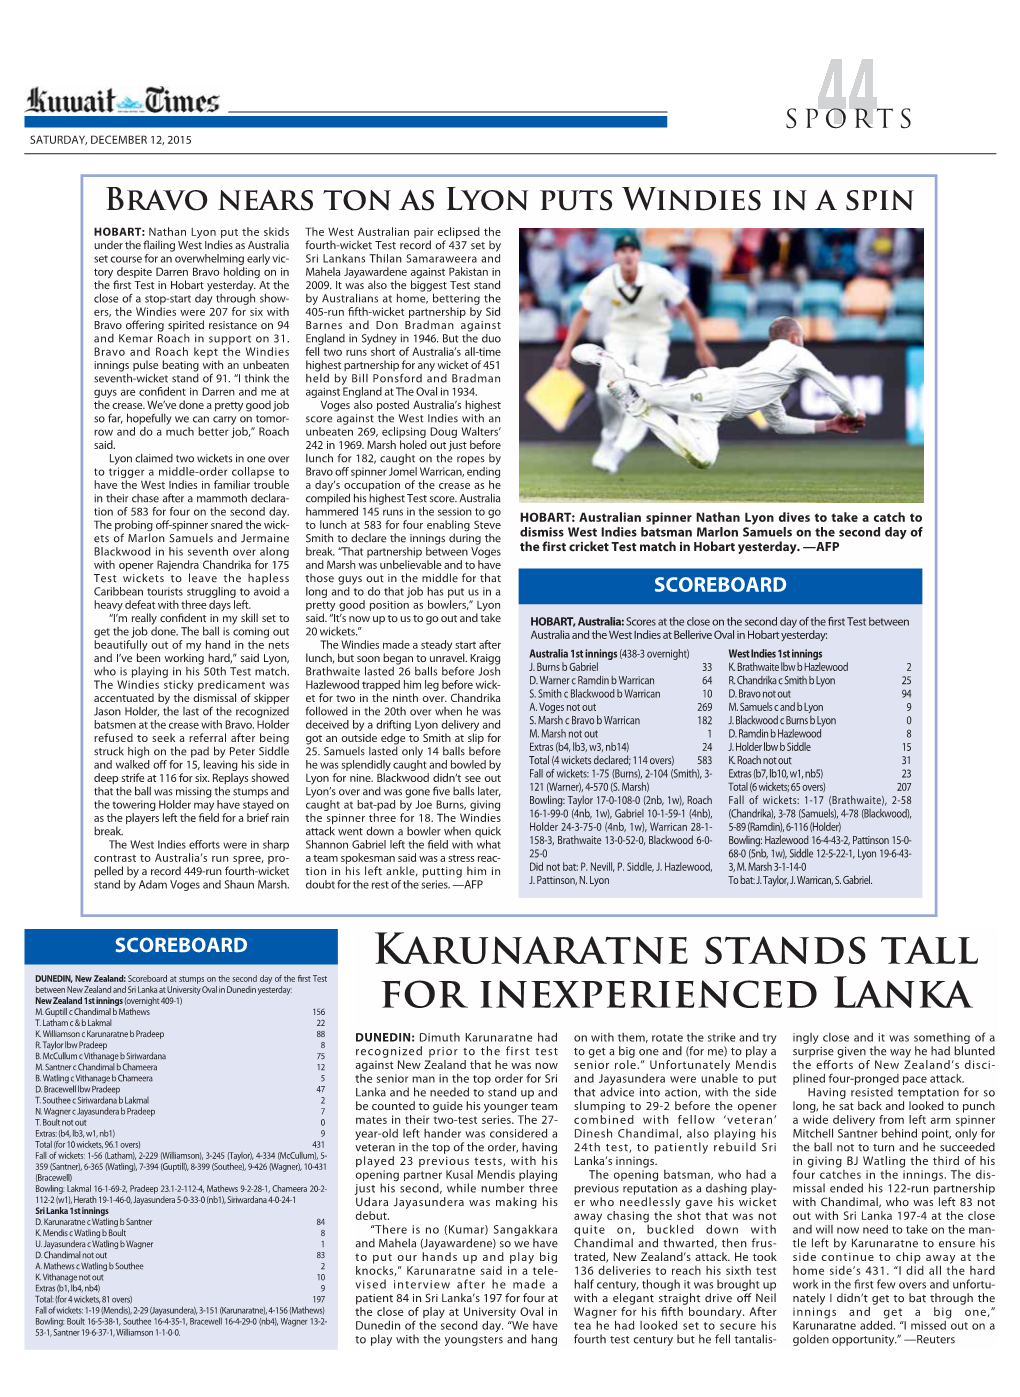 Karunaratne Stands Tall for Inexperienced Lanka